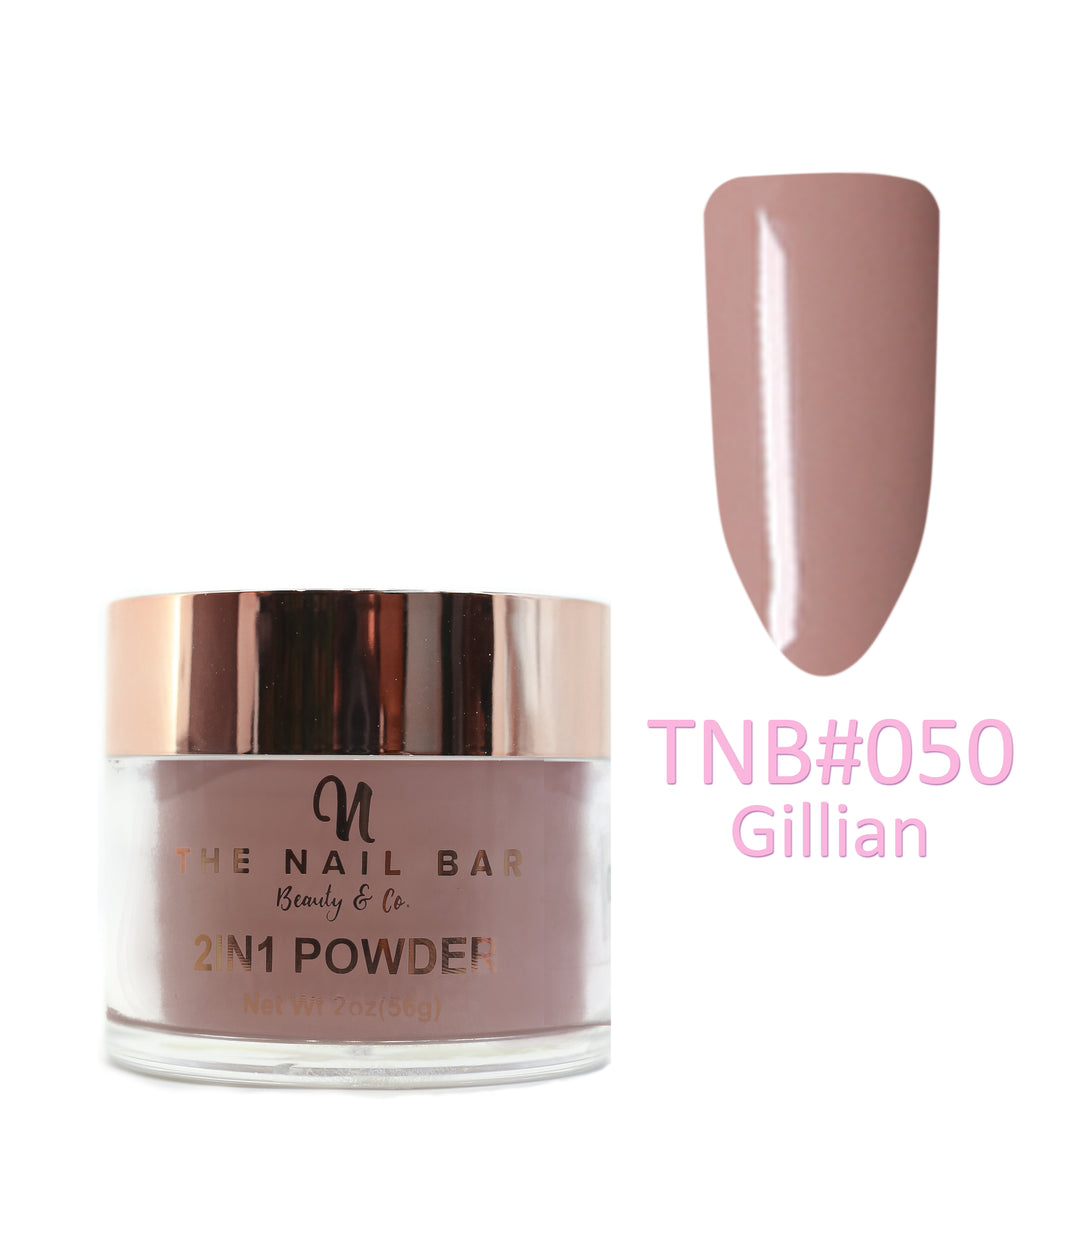 2-In-1 Dipping/Acrylic colour powder (2oz) -Gillian - The Nail Bar Beauty & Co.